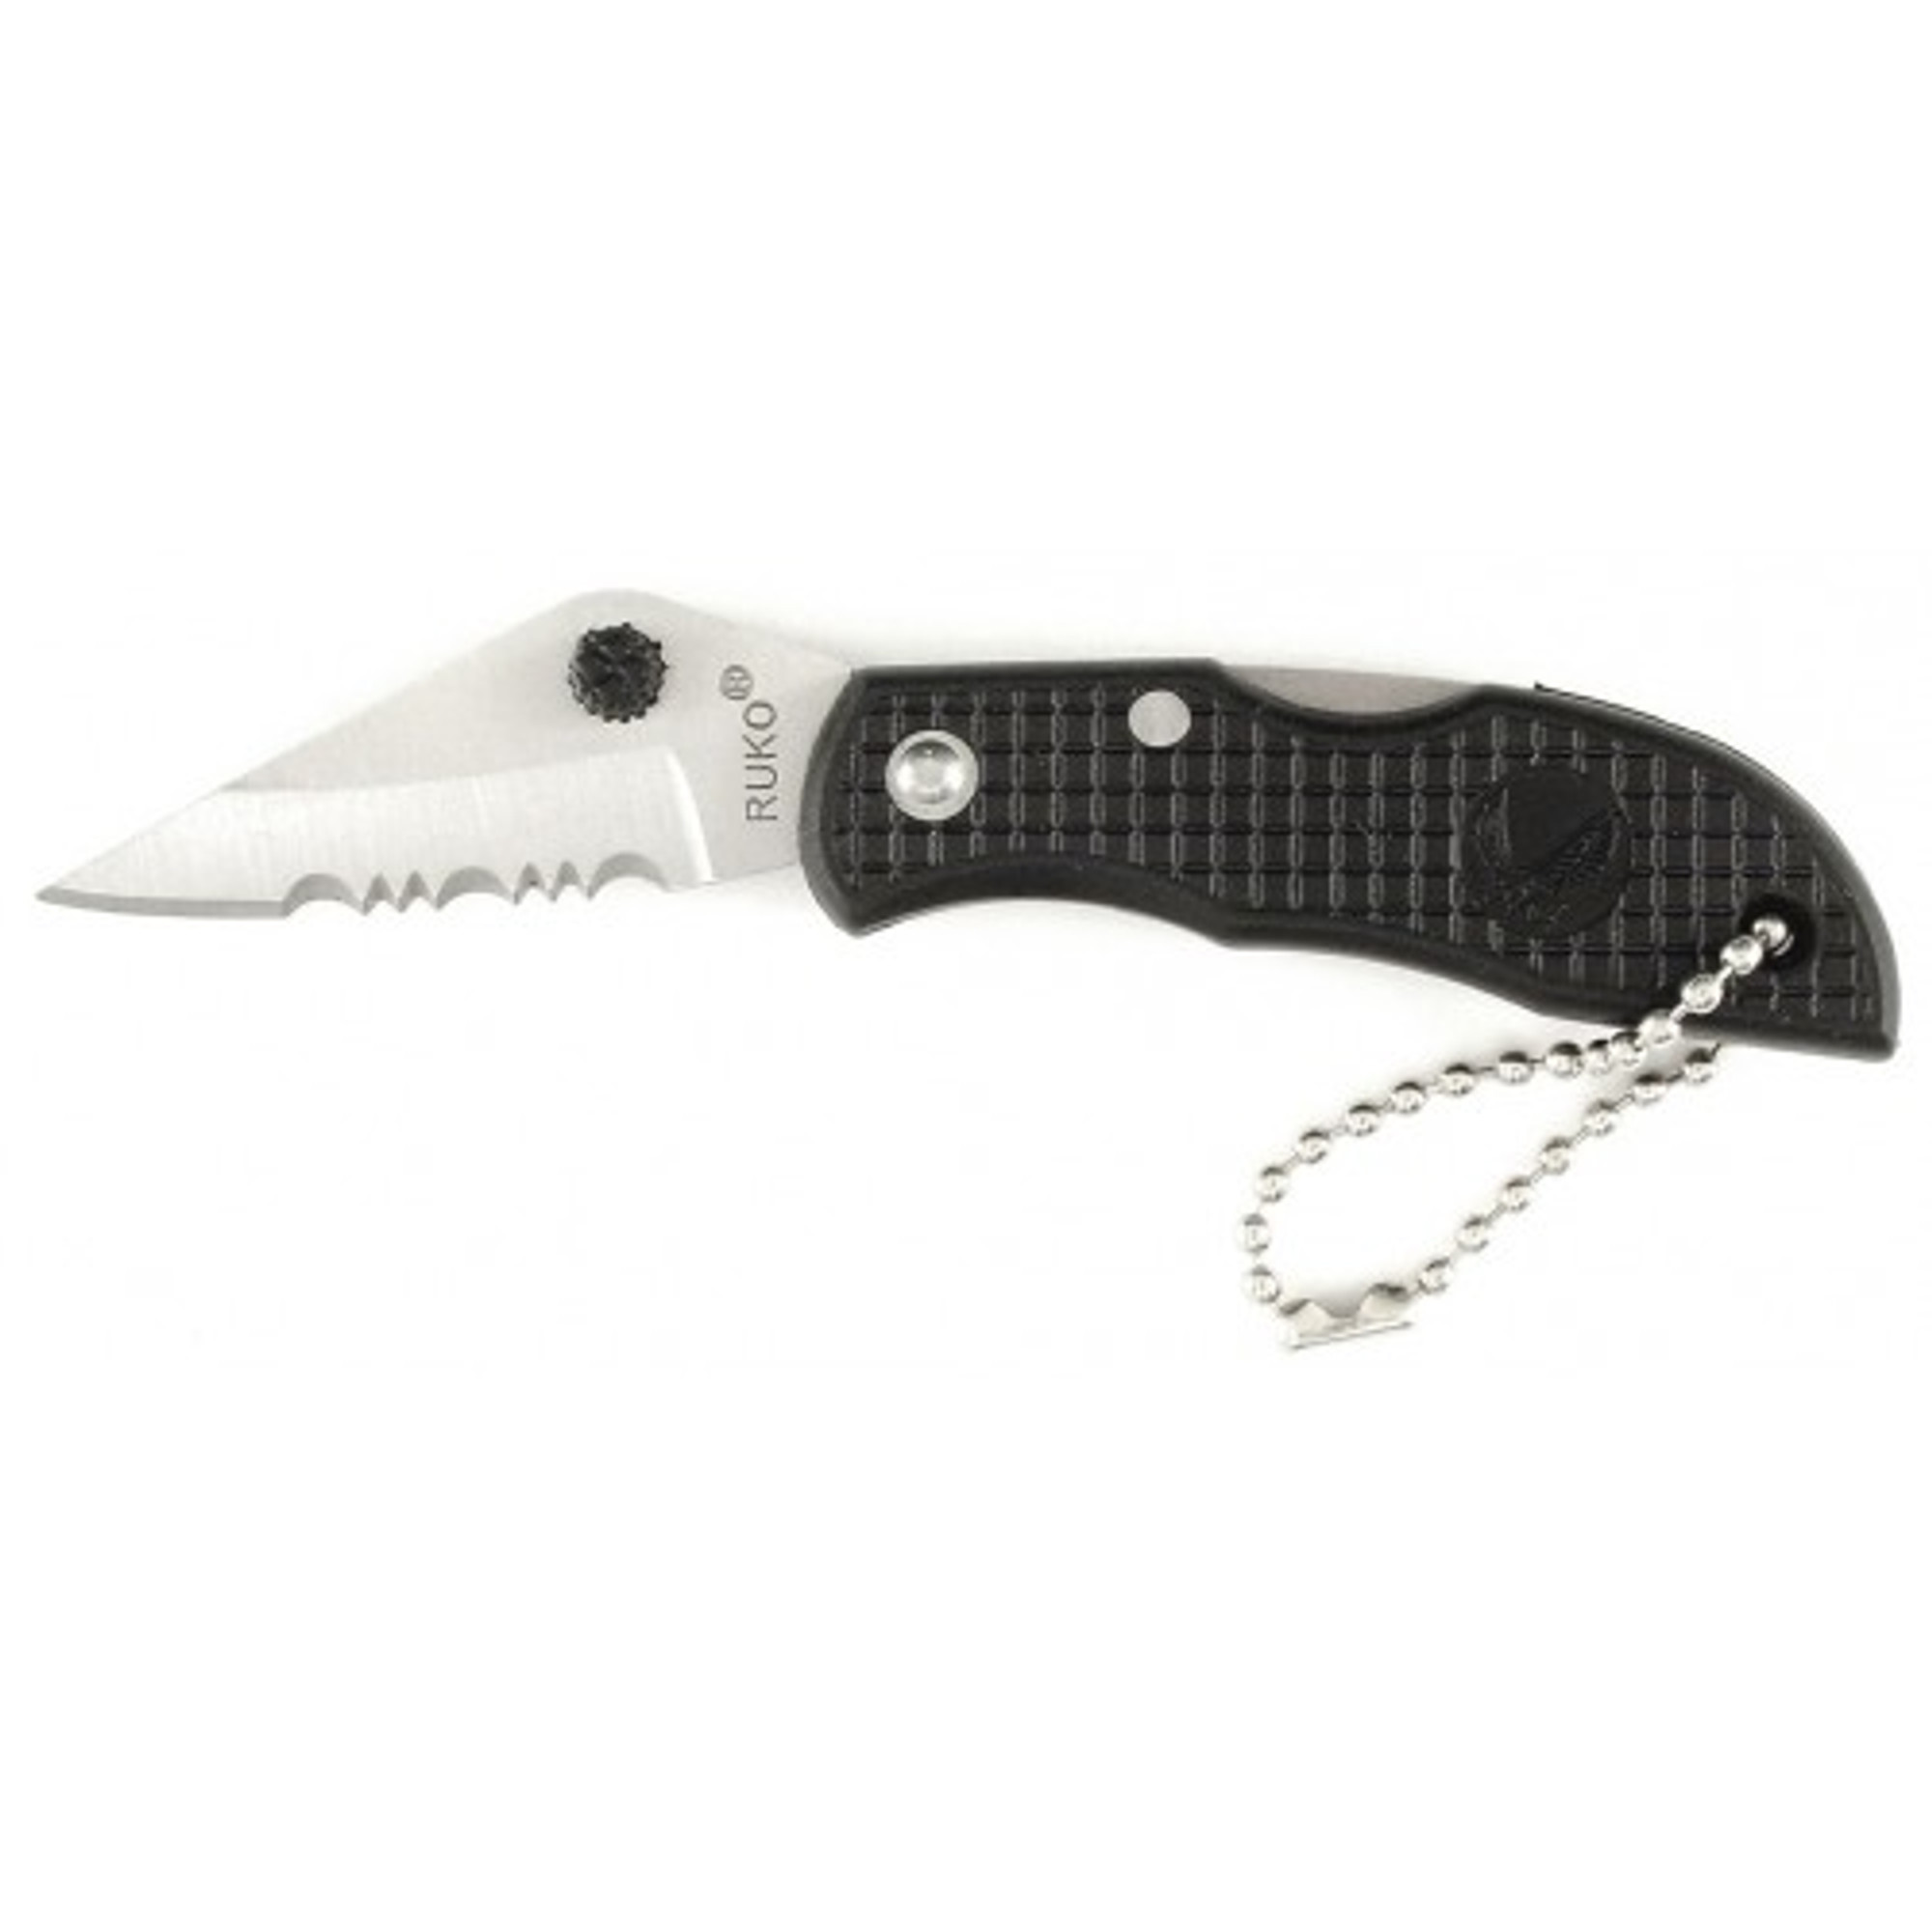 RUKO RK7032, 420A, 1-7/8" Folding Blade Pocket Knife, Nylon Handle, boxed